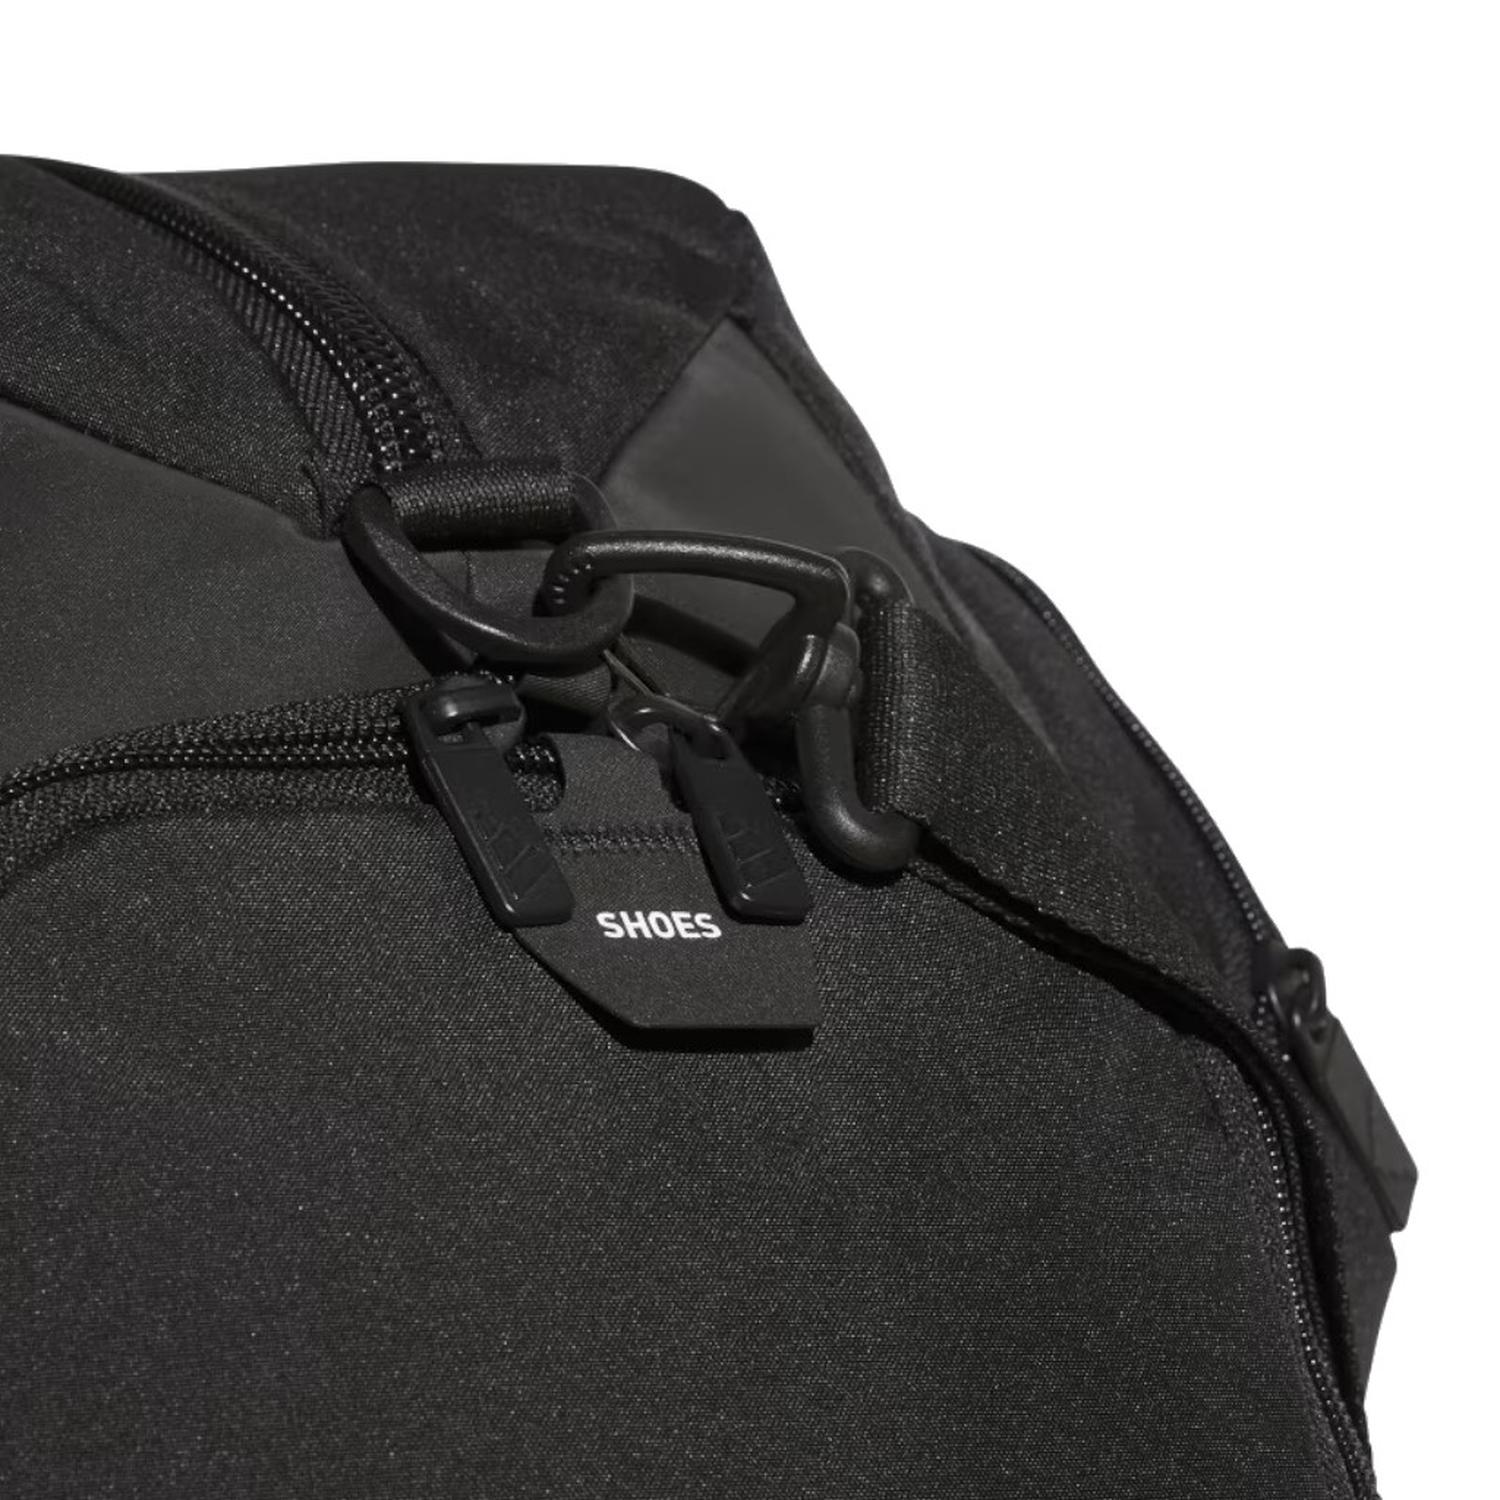 Maleta Adidas Duffle Bag